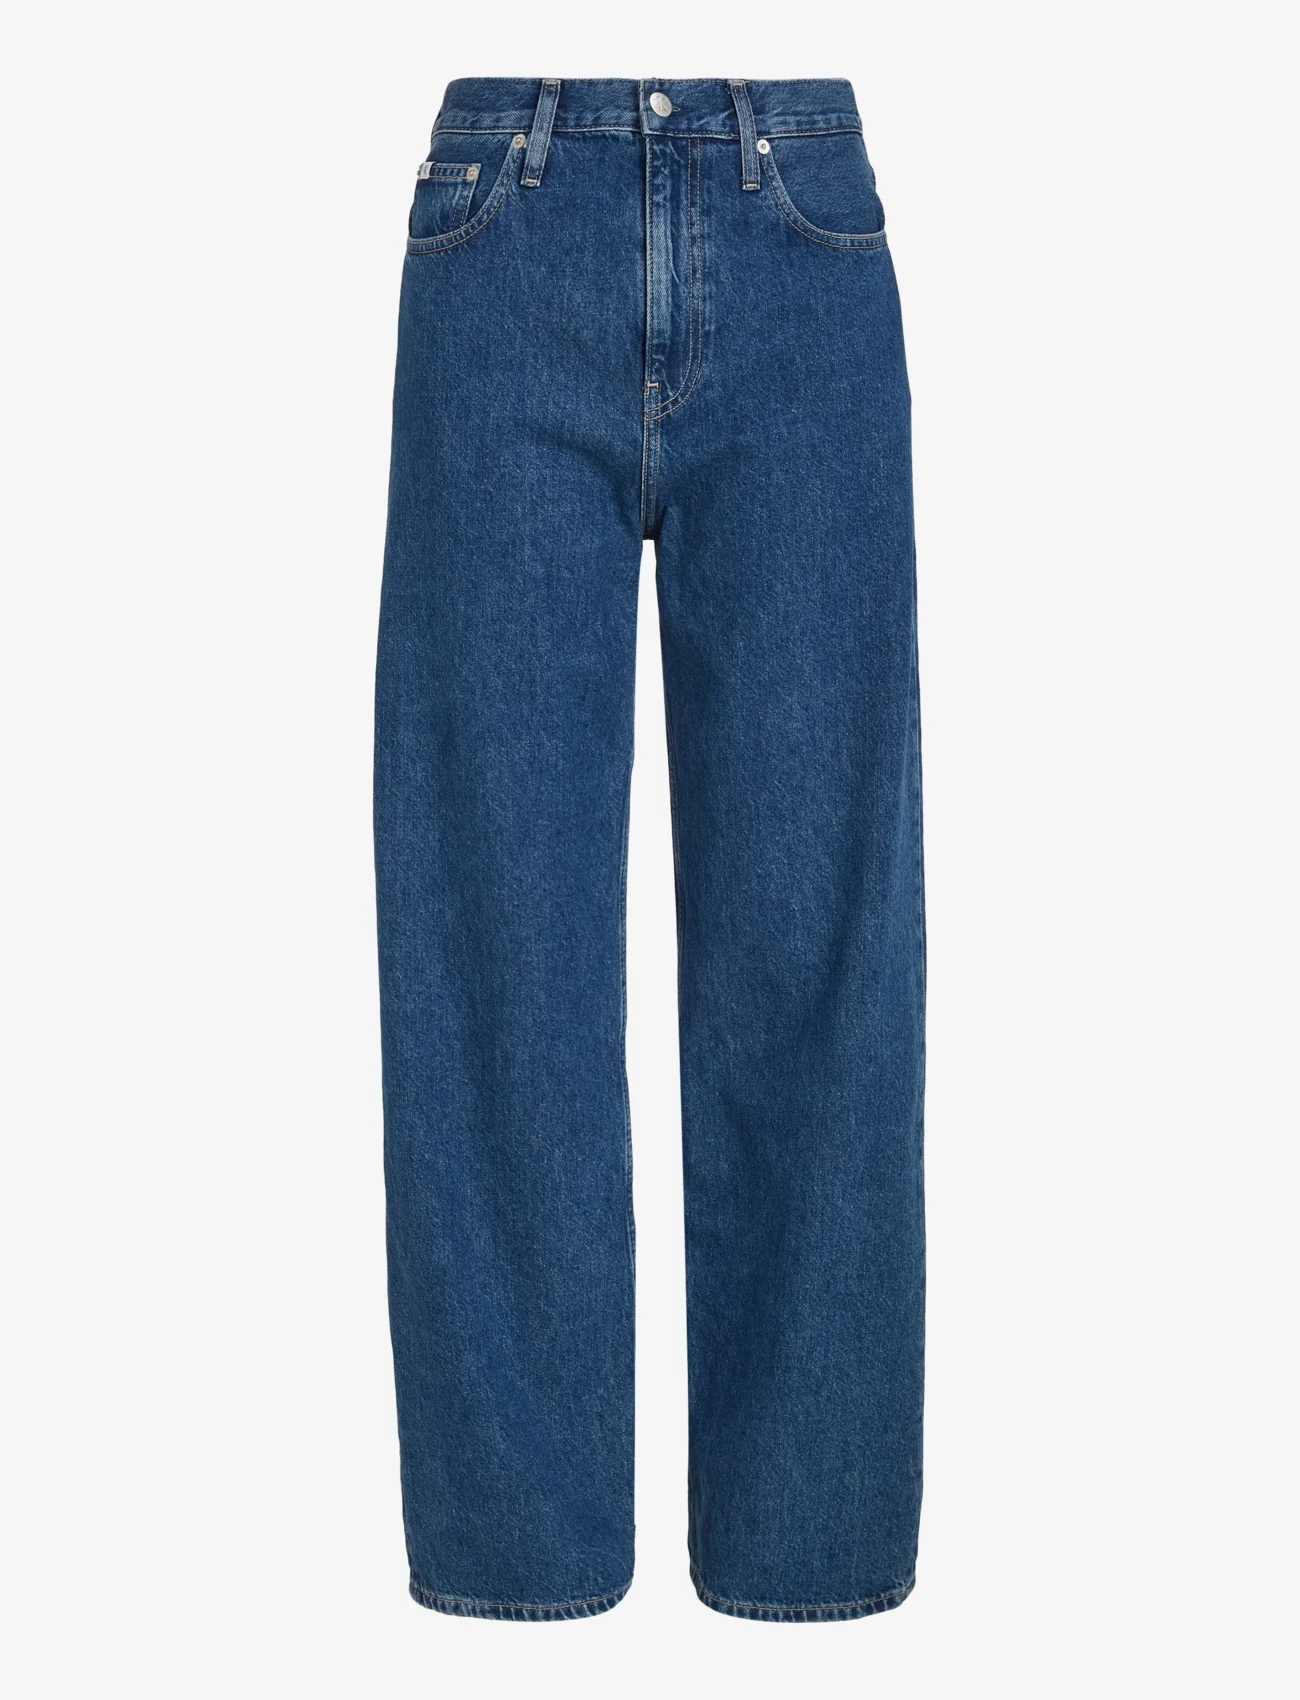 Calvin Klein Jeans - HIGH RISE RELAXED - sirge säärega teksad - denim medium - 0